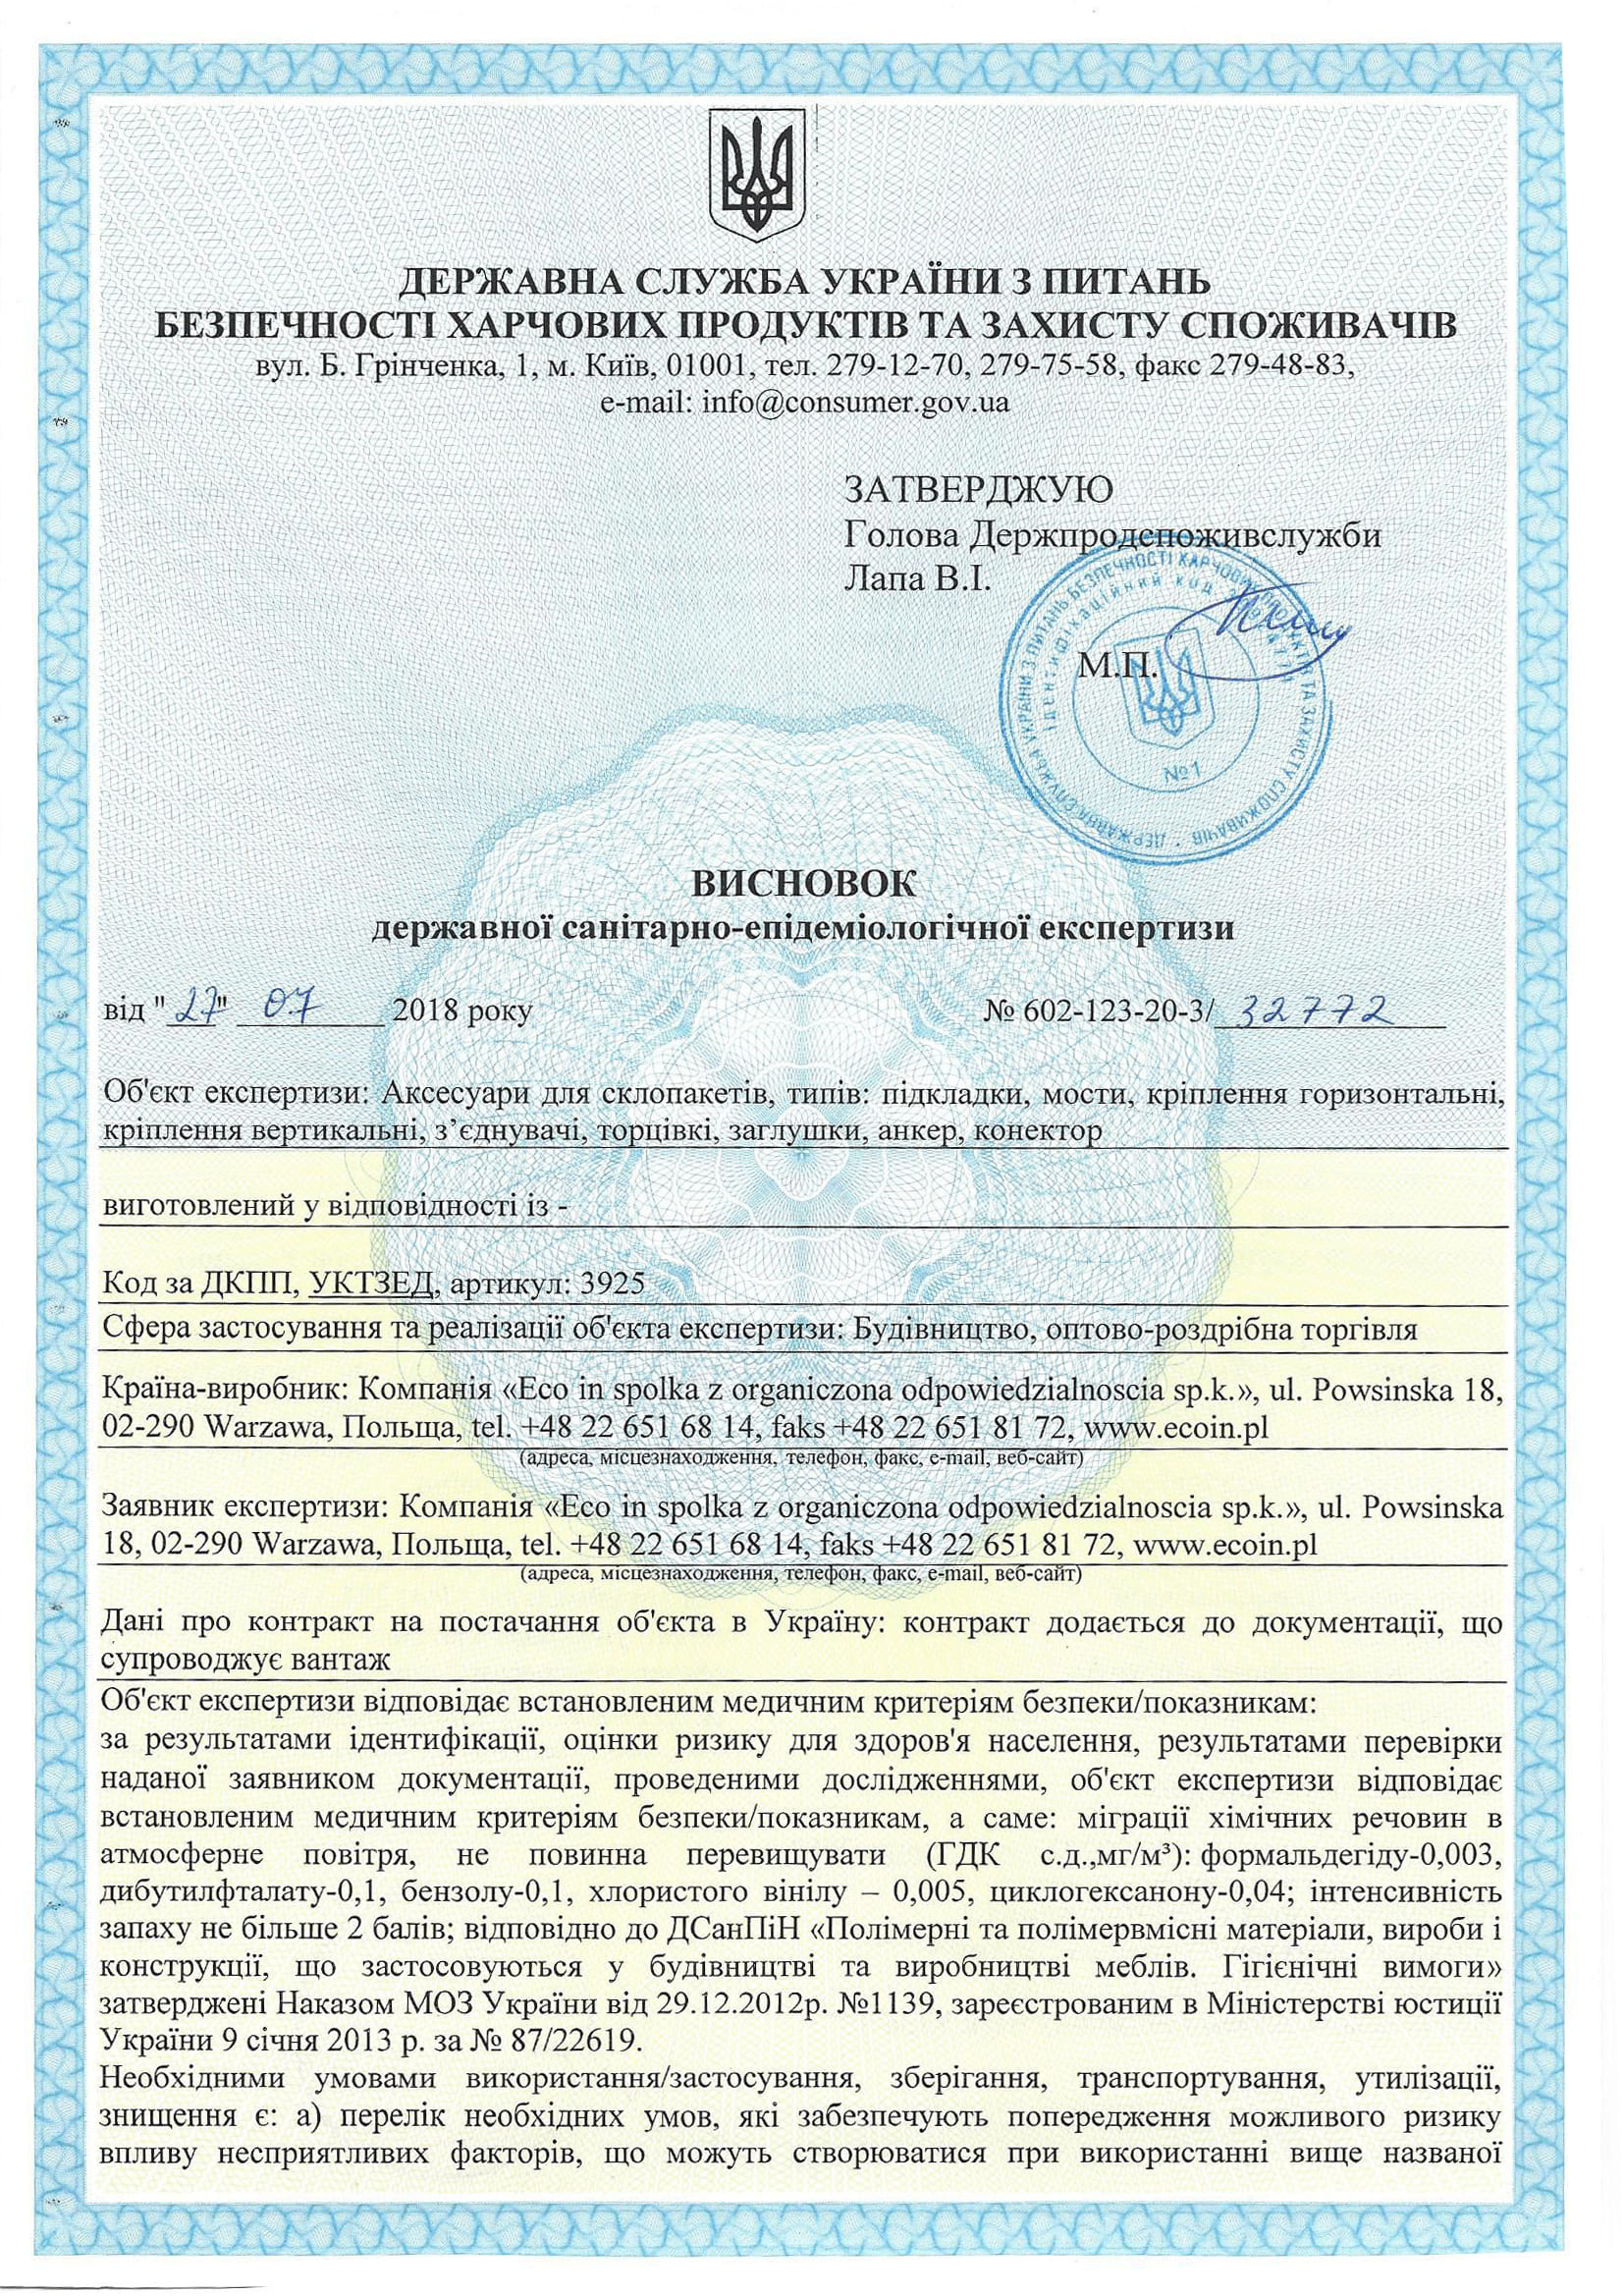 Сертификат №11